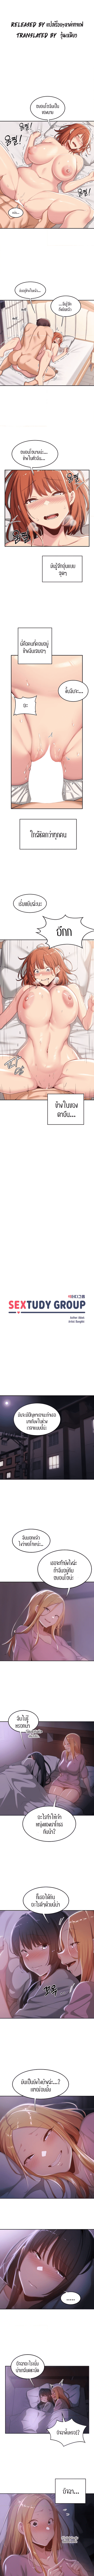 Sextudy Group 60 (1)